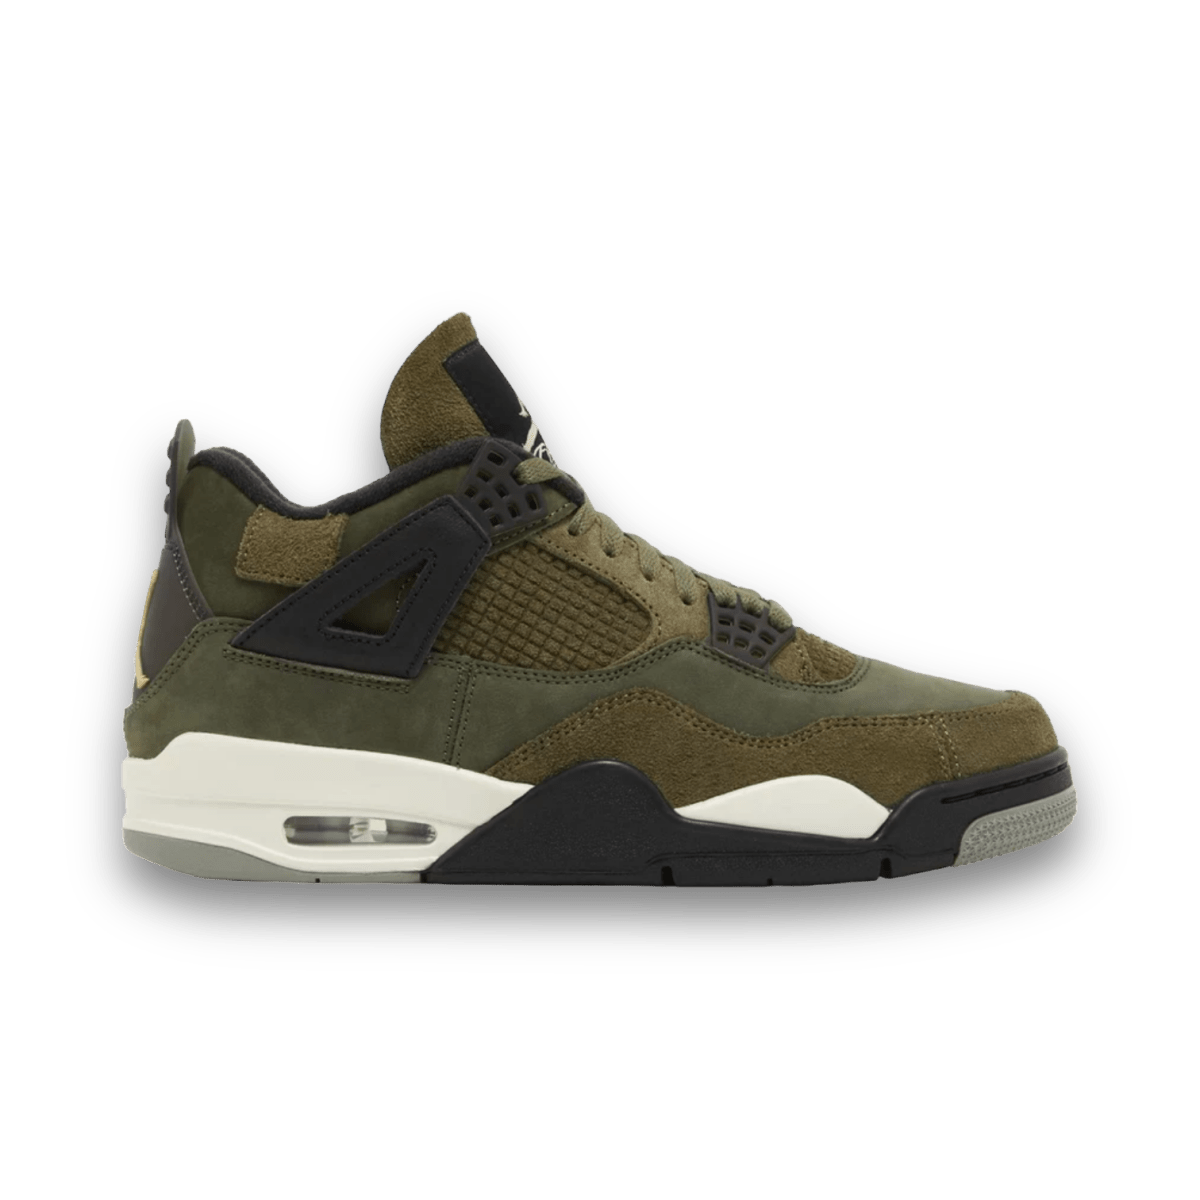 Air Jordan 4 Retro SE 'Craft - Olive' - Mid Sneaker - Jawns on Fire Sneakers & Streetwear